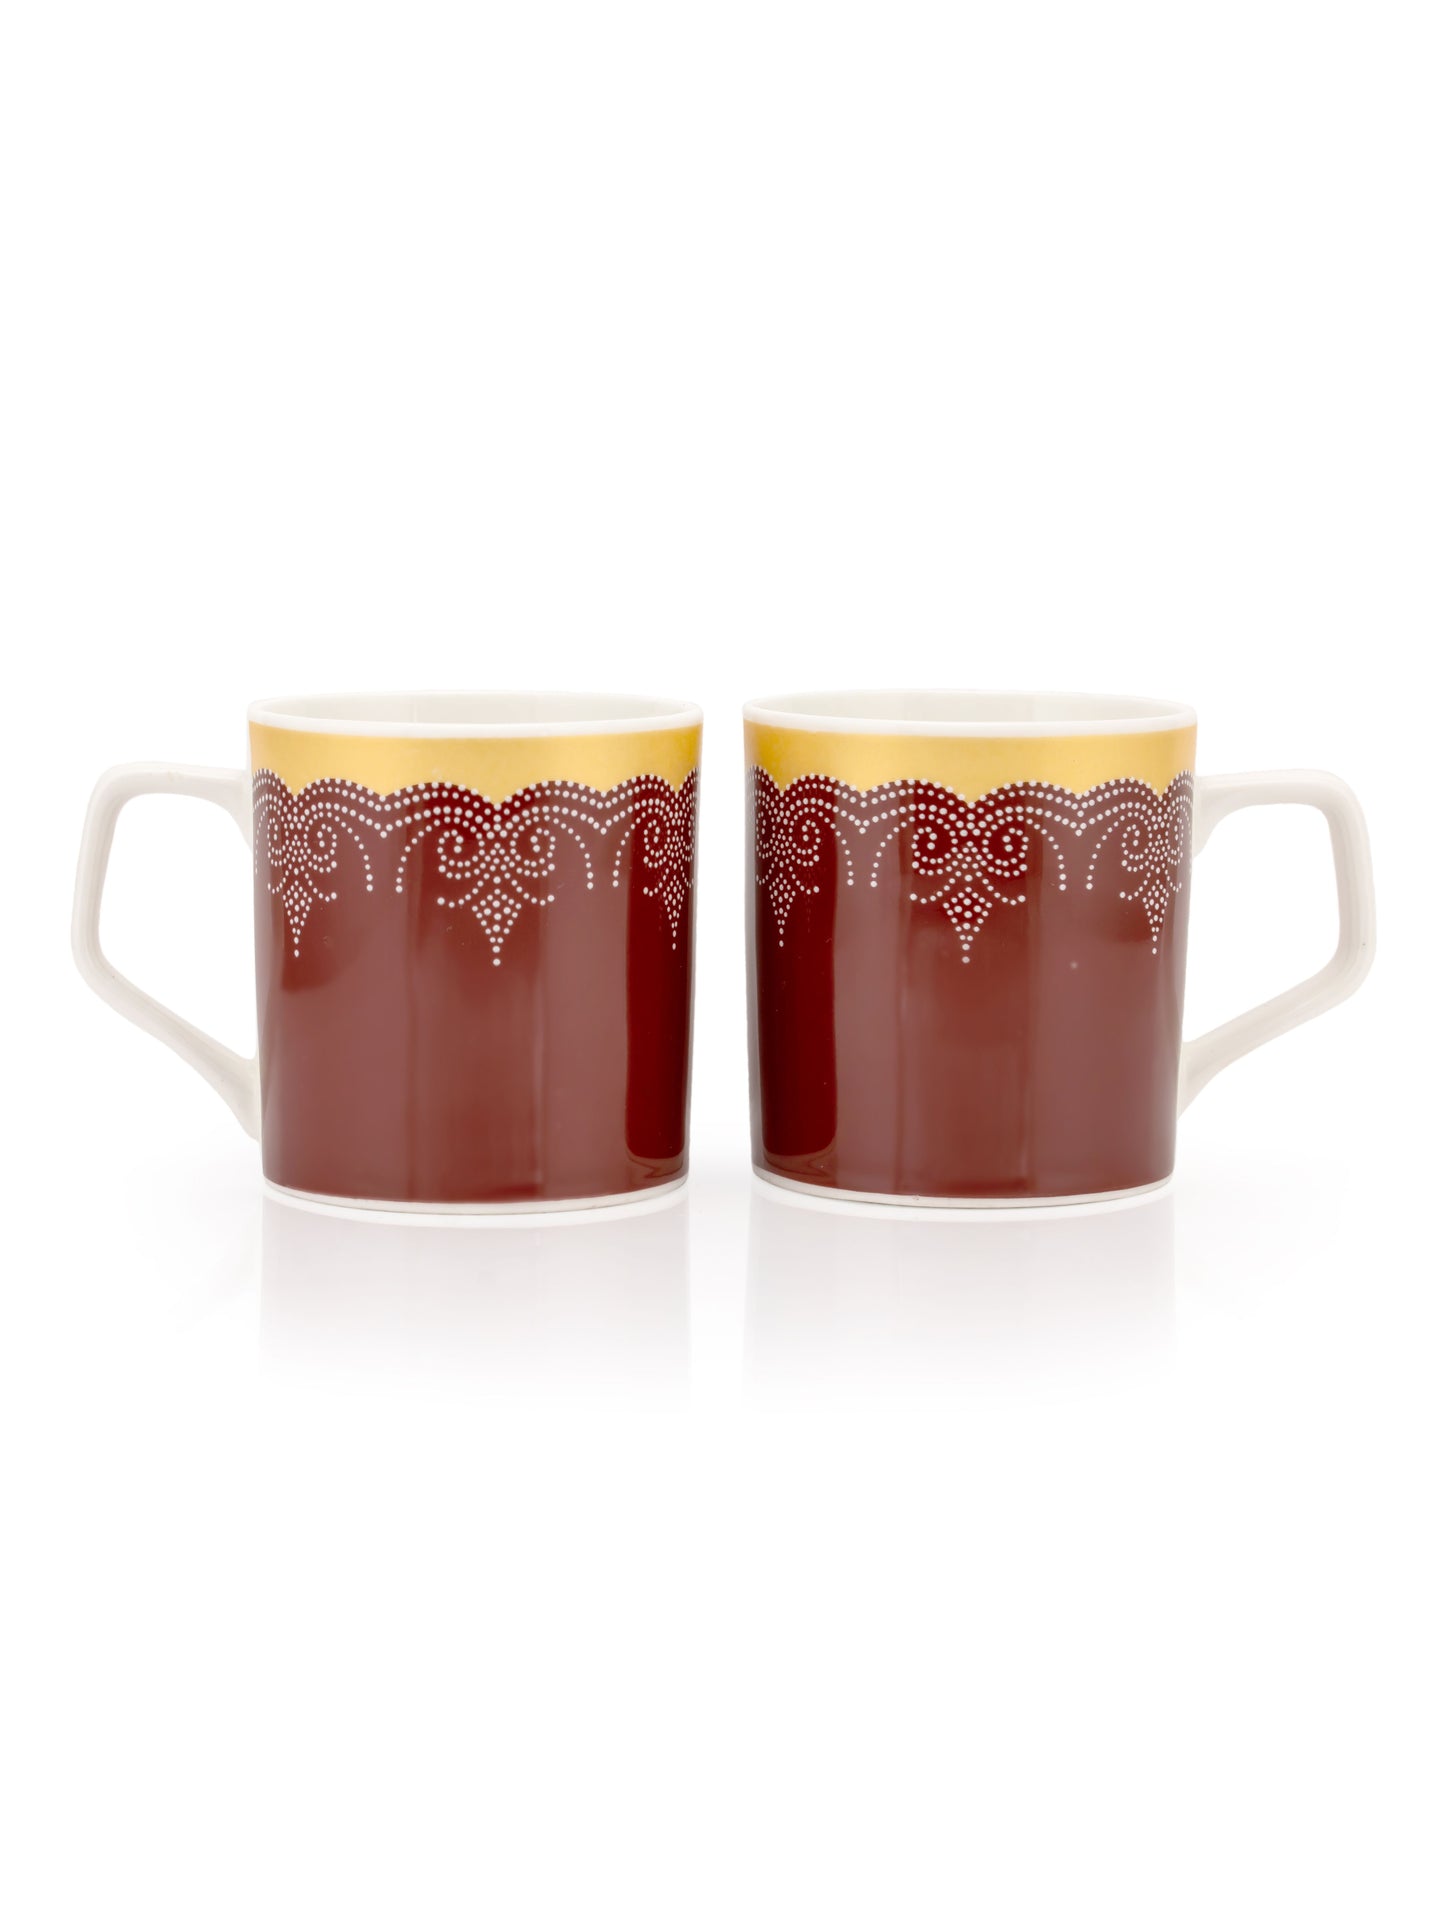 JCPL Director Hilton Coffee & Tea Mug Set of 6 (R302)